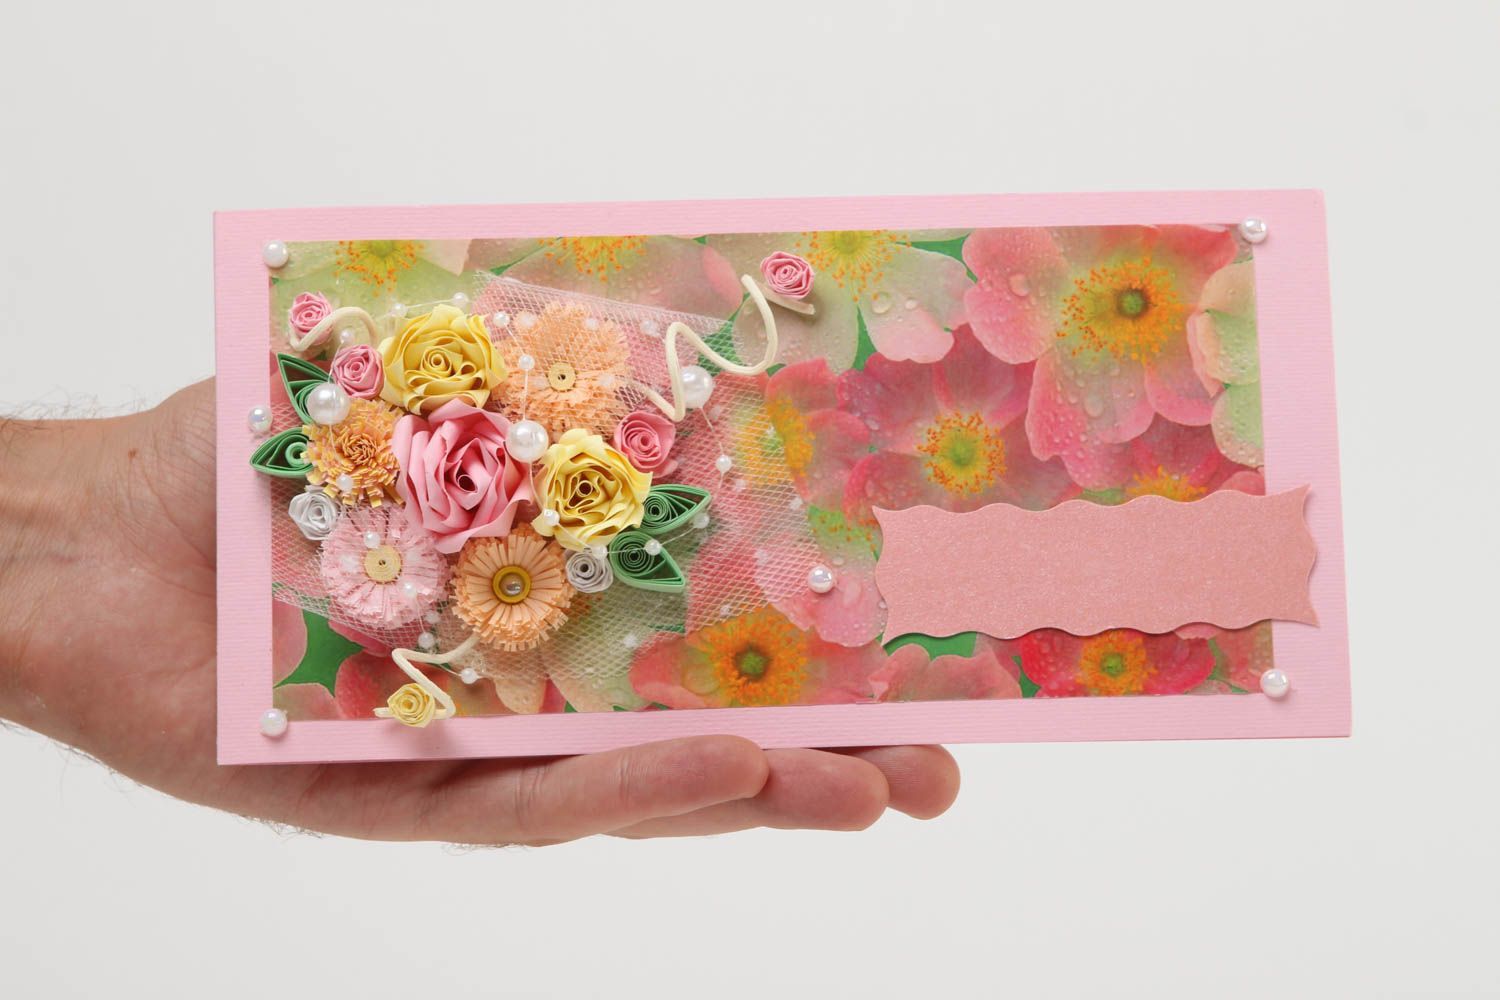 Handmade schöne Grusskarten Scrapbook Karten Papier Karten bunt rosa modisch foto 5